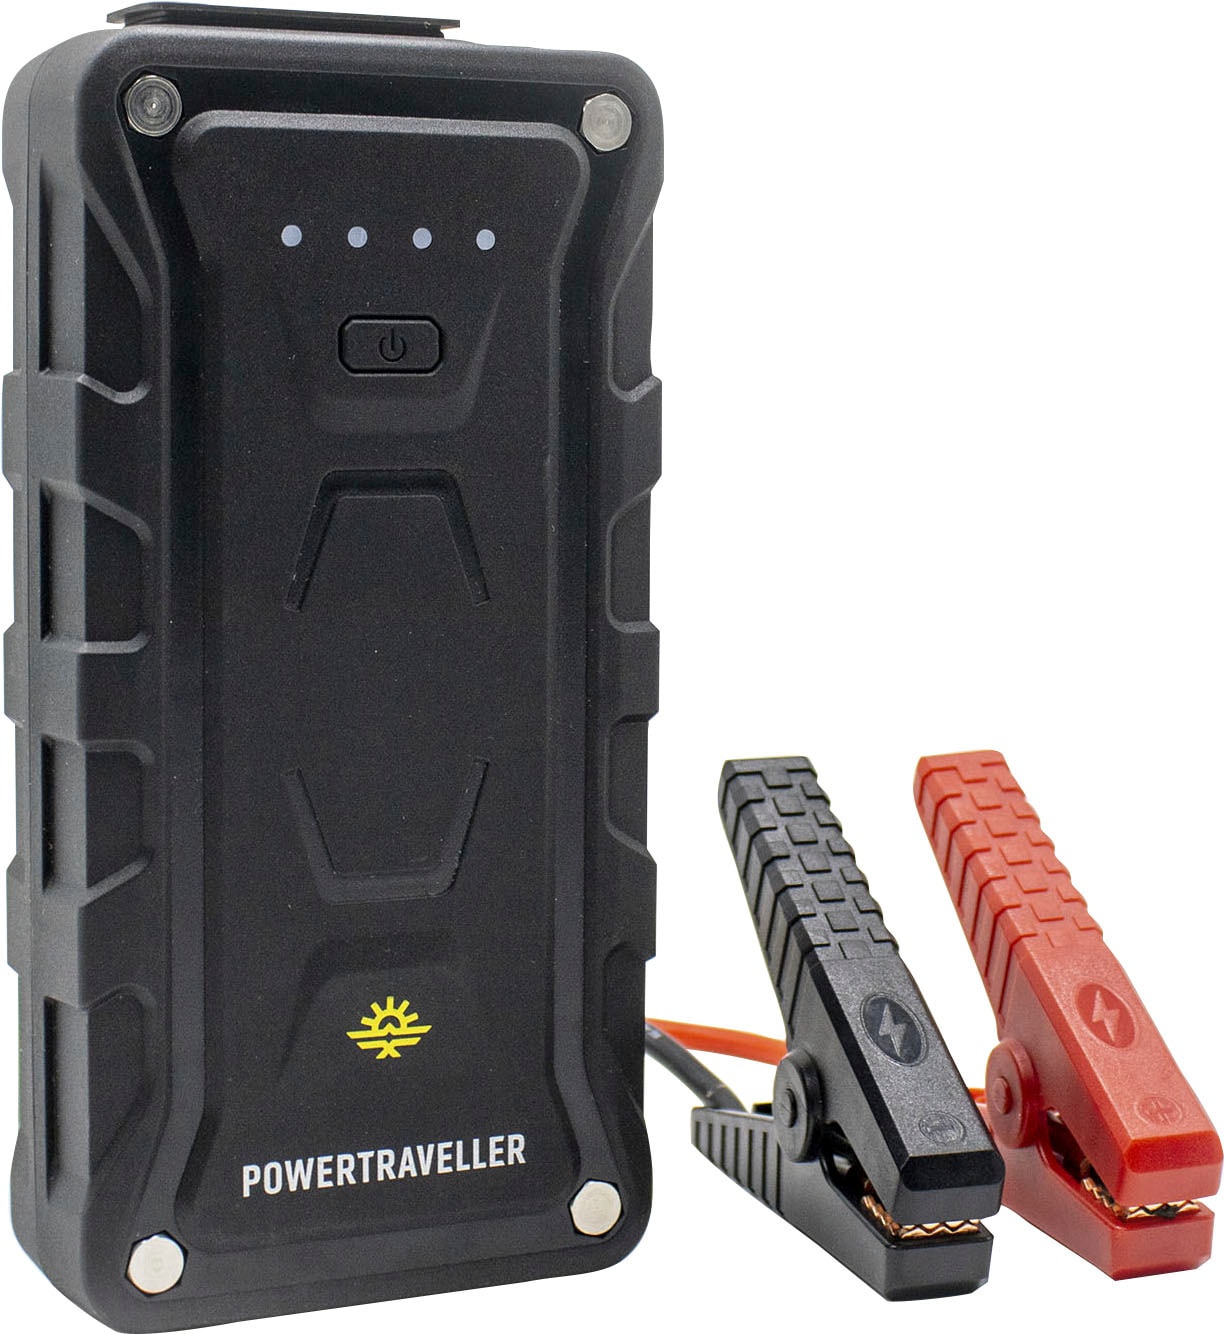 Powertraveller Autobatterie-Ladegerät, 3000 mA, tragbare